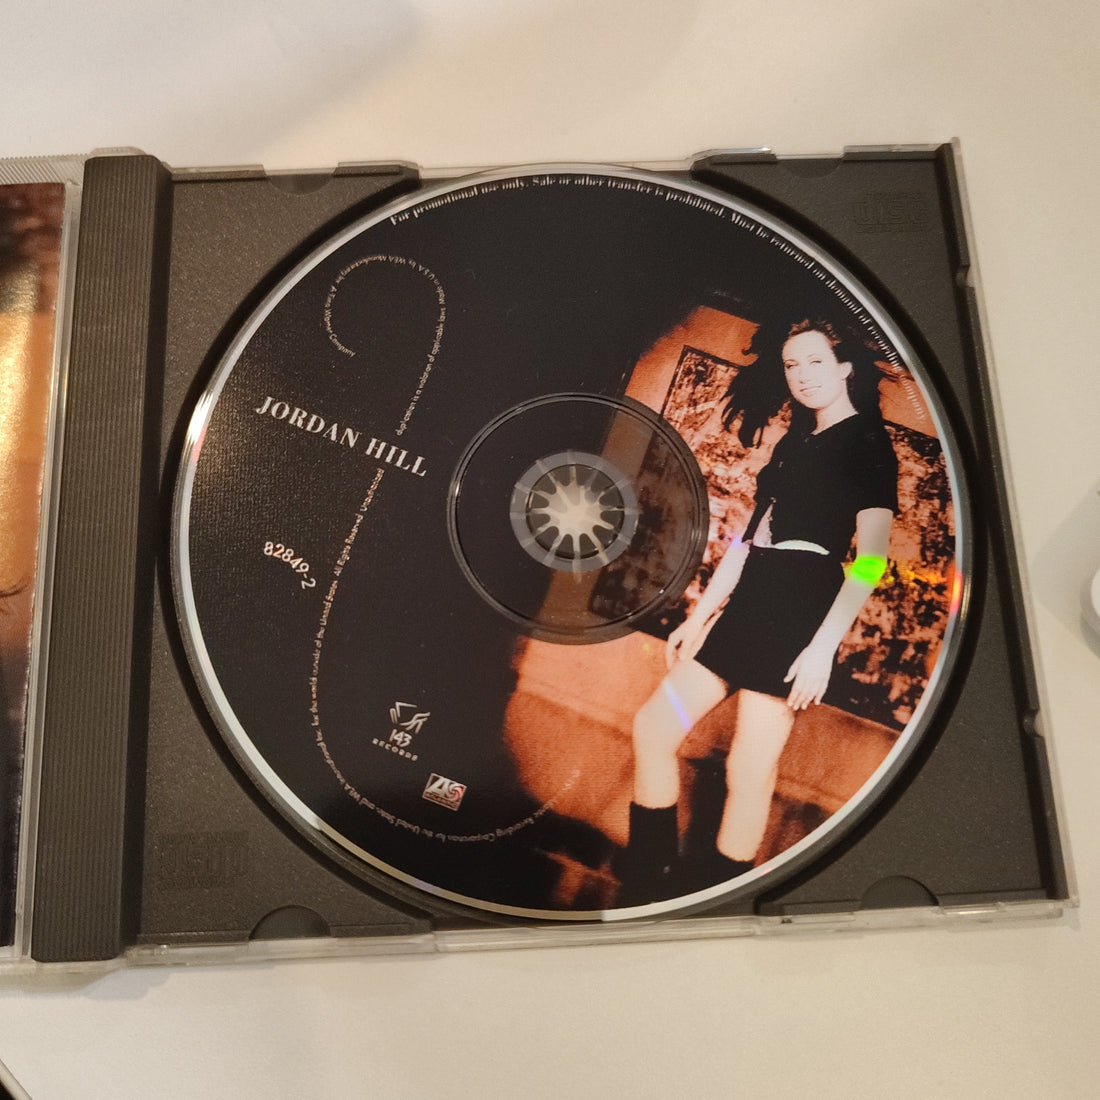 Jordan Hill - Jordan Hill (CD) (VG+)